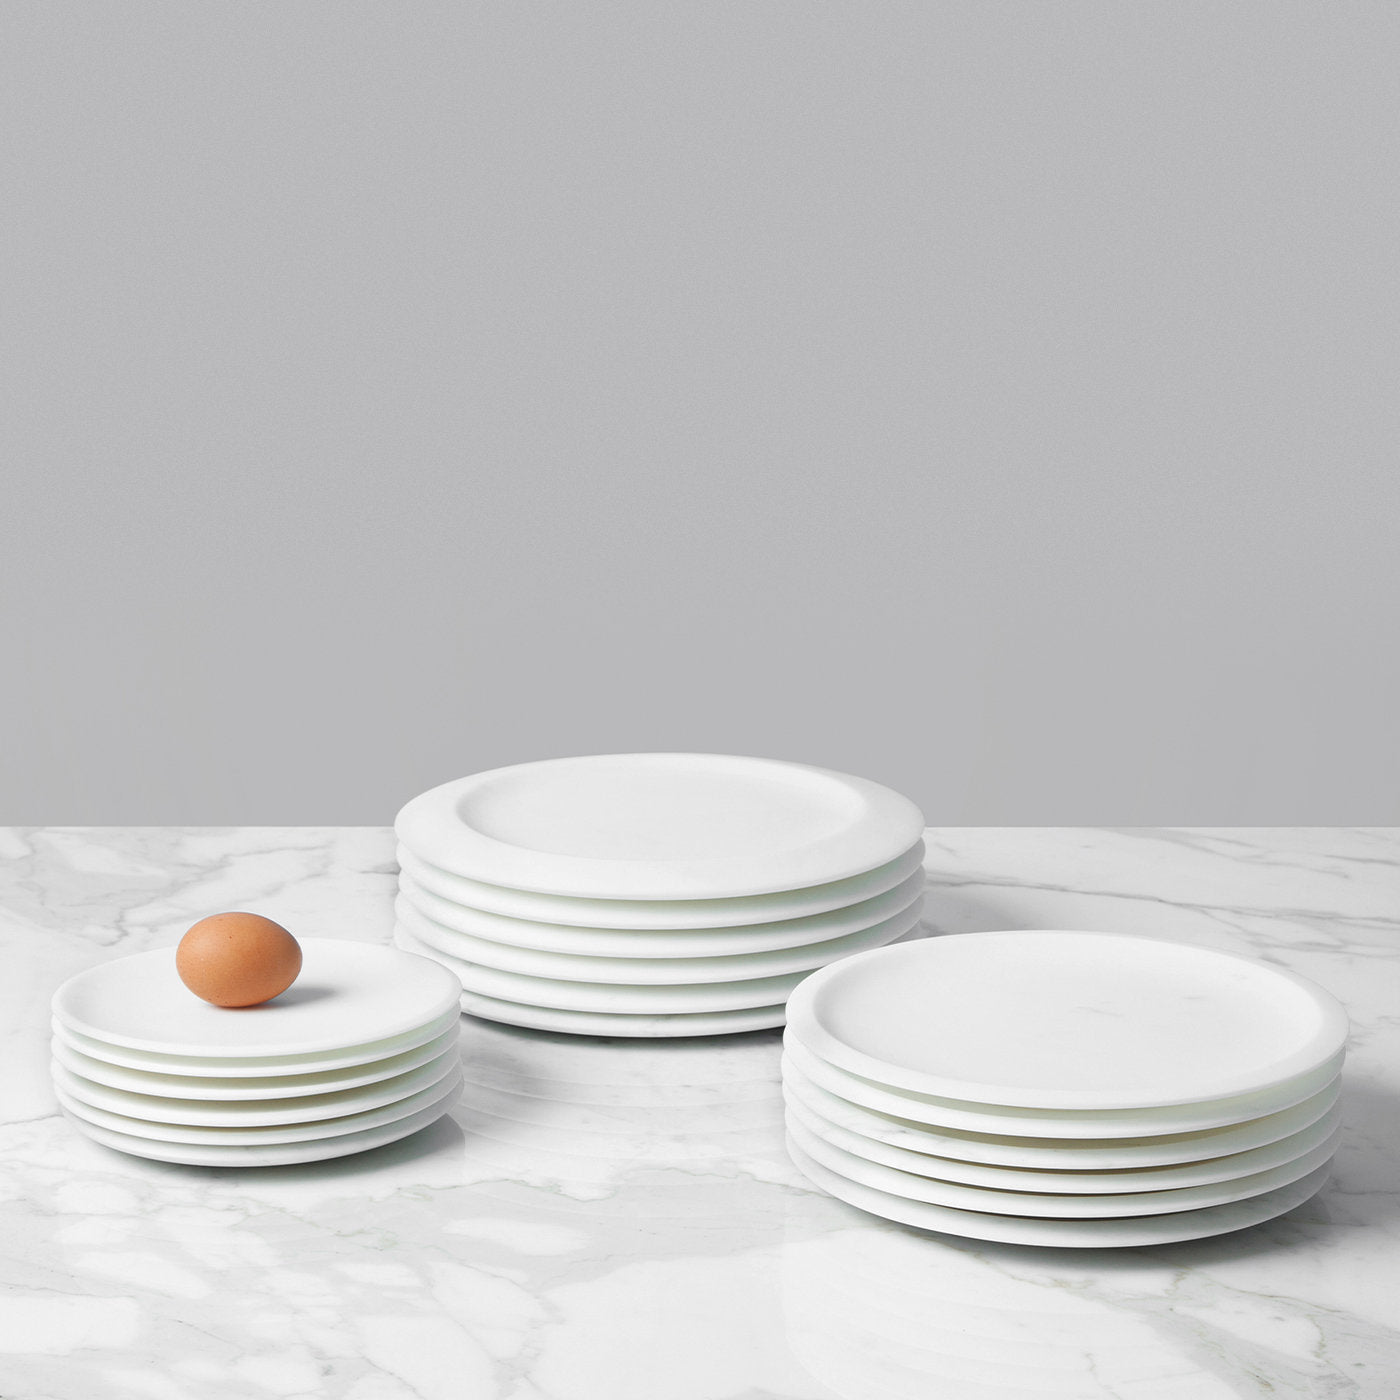 White Carrara Dinner Plate by Ivan Colominas #2 - Alternative view 2